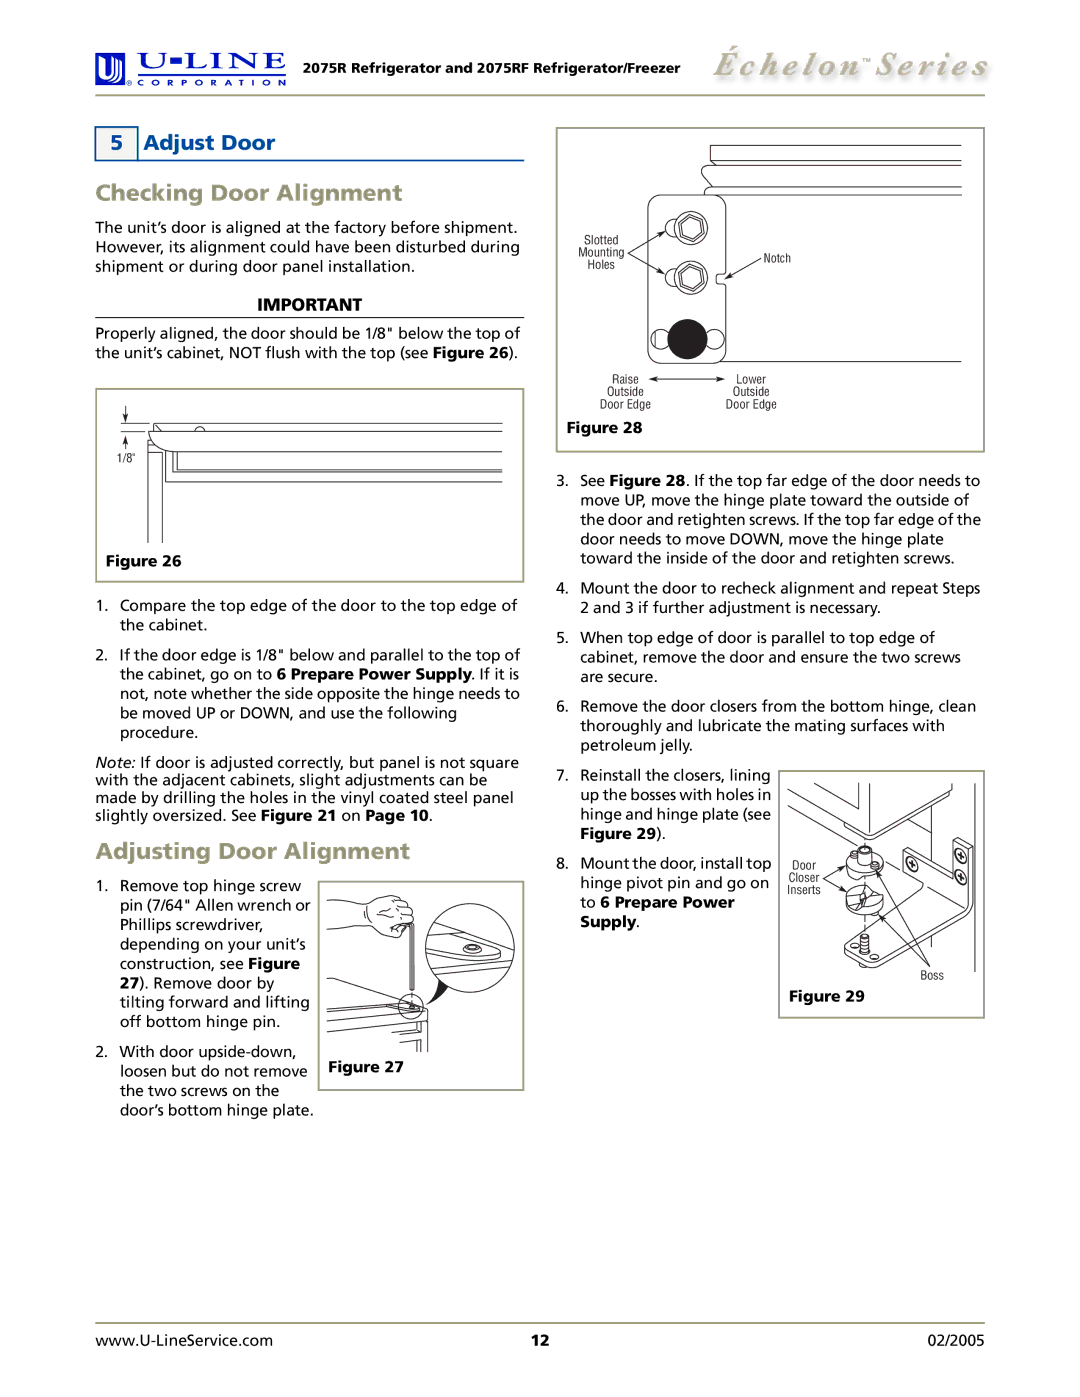 U-Line 2075RF manual Checking Door Alignment, Adjusting Door Alignment, Adjust Door, To 6 Prepare Power, Supply 